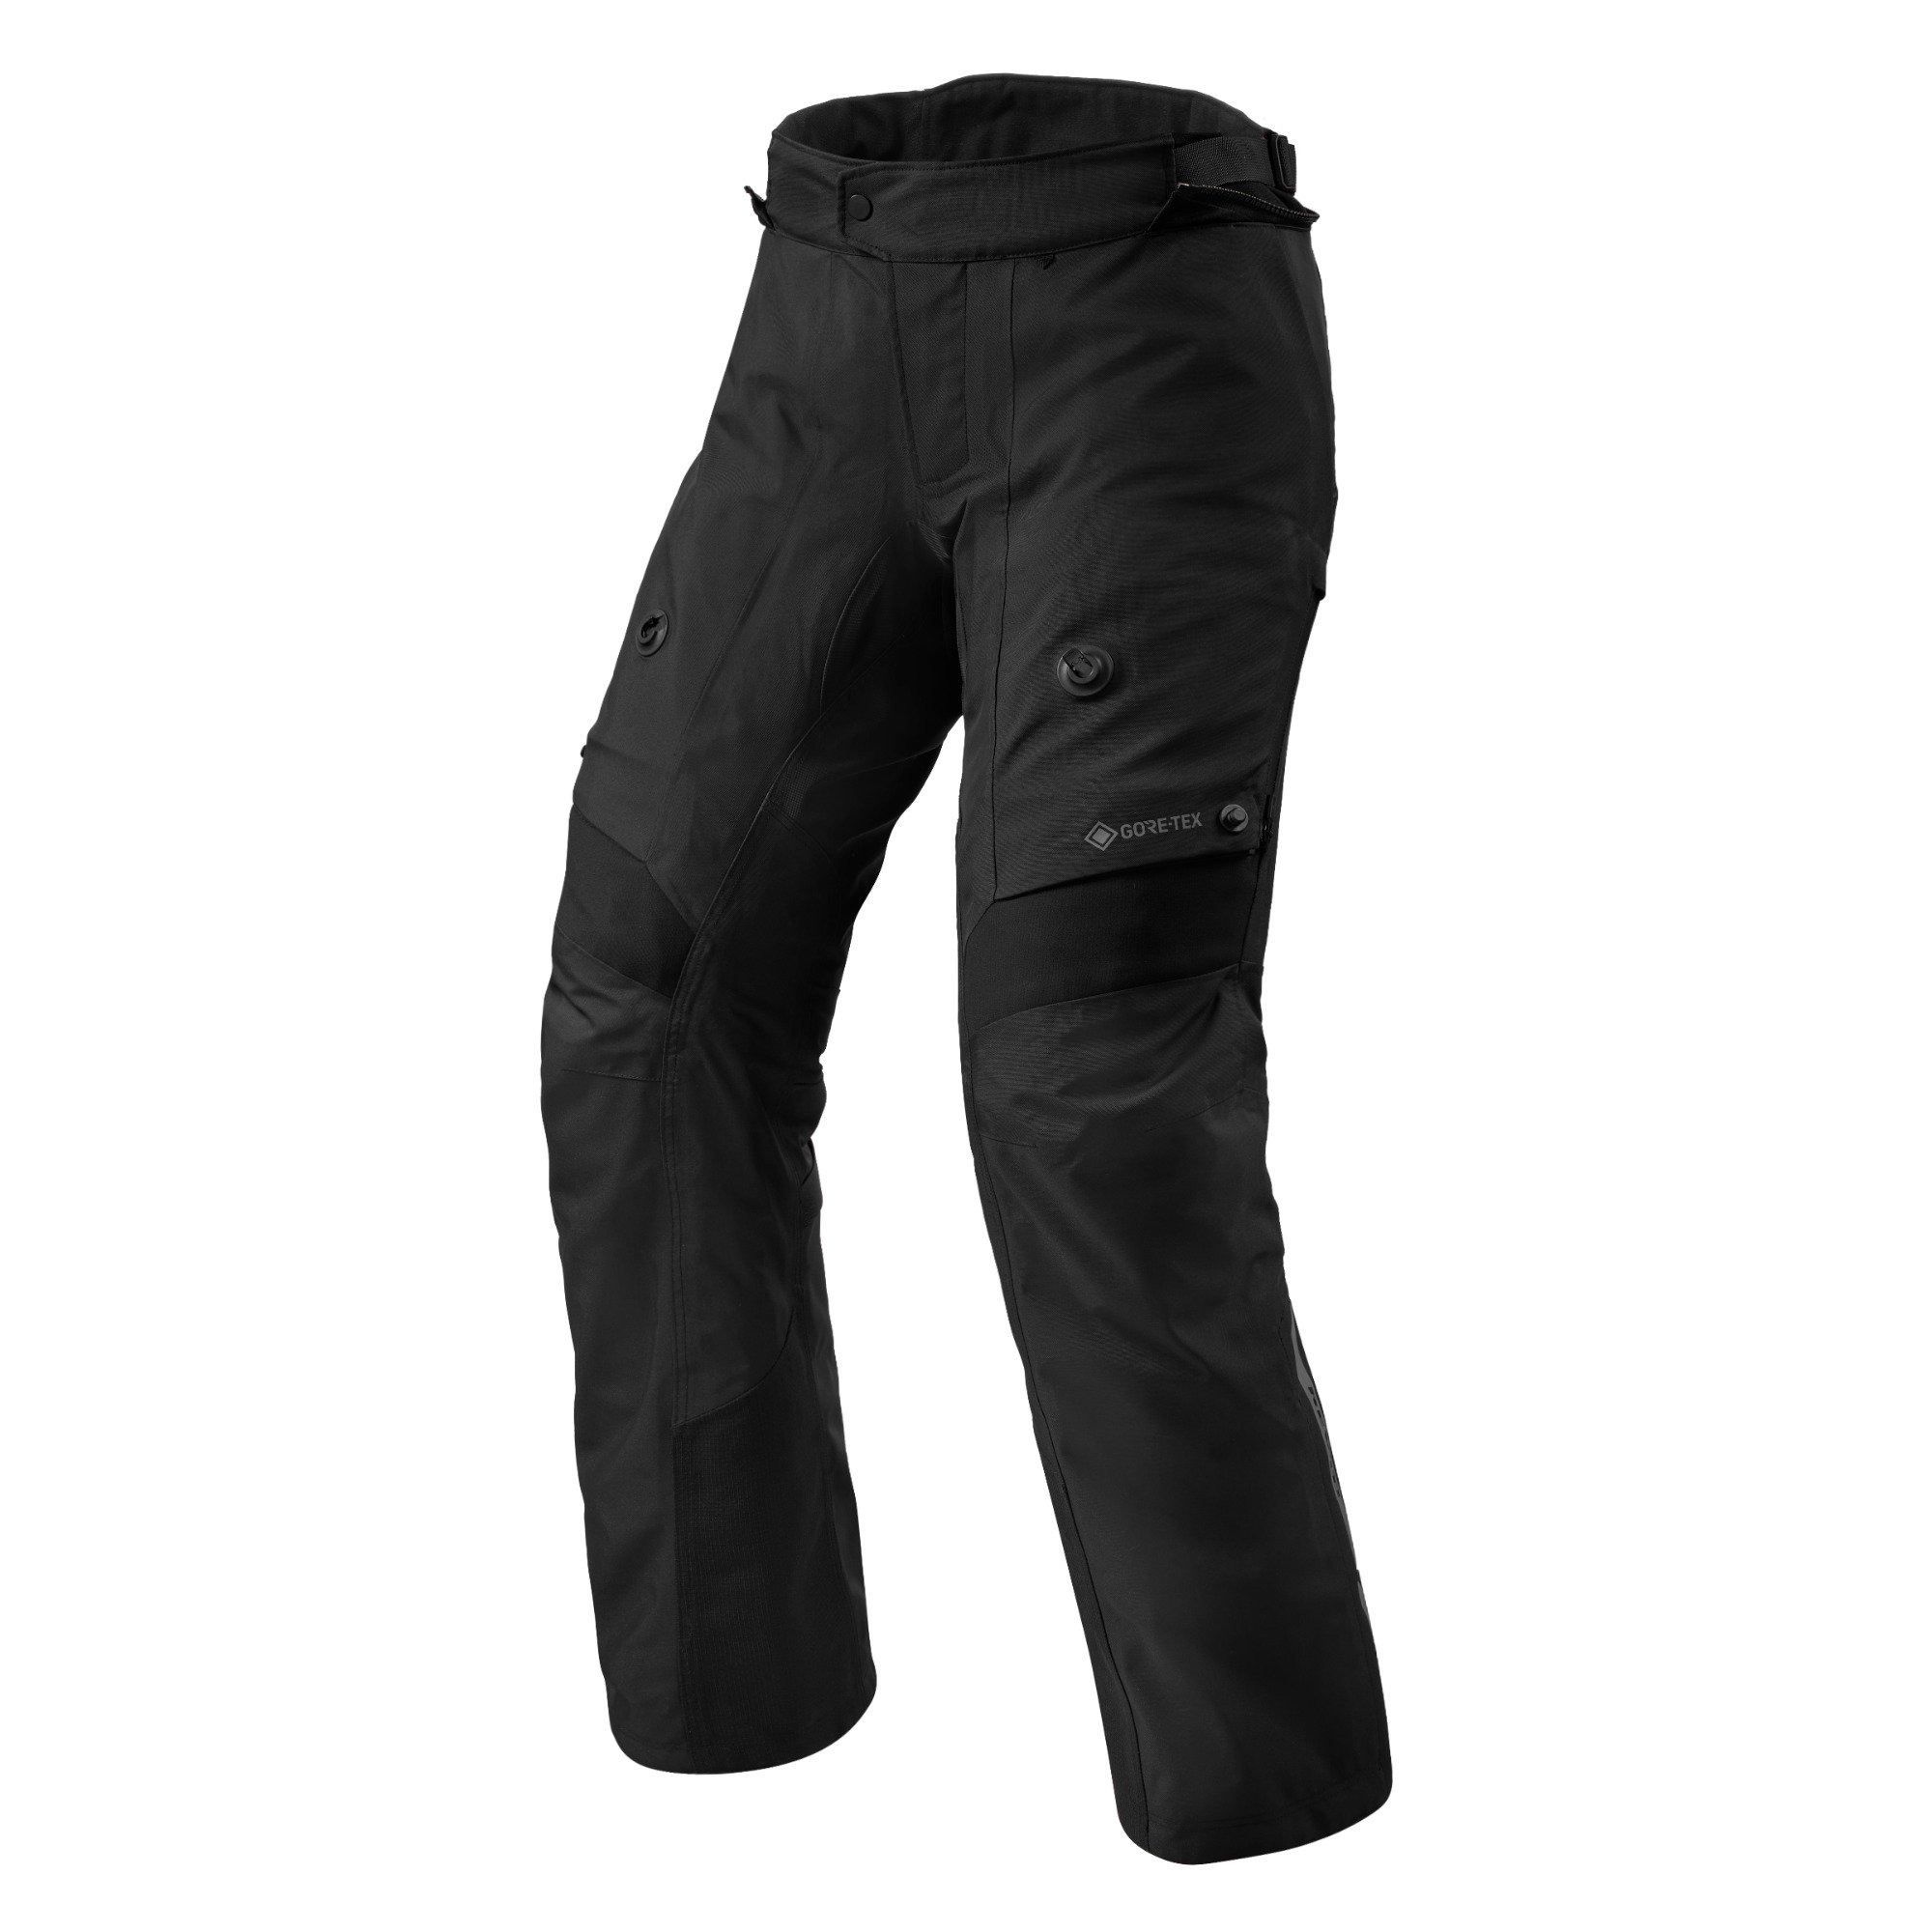 Image of REV'IT! Pants Poseidon 3 GTX Black Standard Motorcycle Pants Size 4XL ID 8700001362498